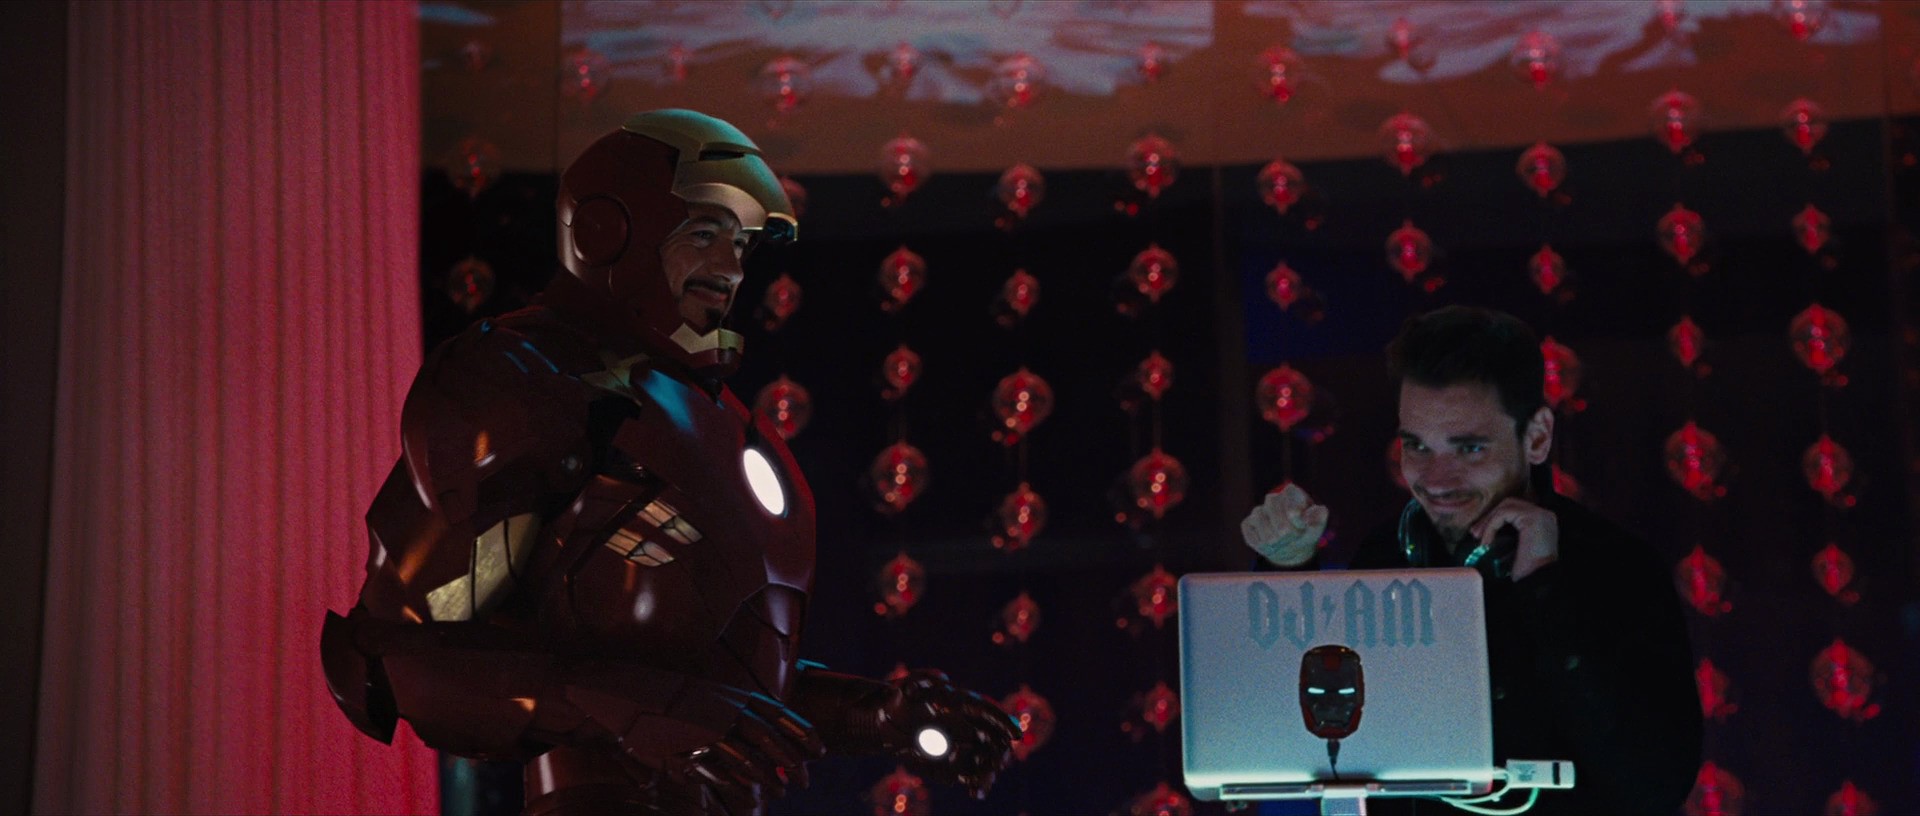 iron-man2-movie-screencaps.com-6295.jpg